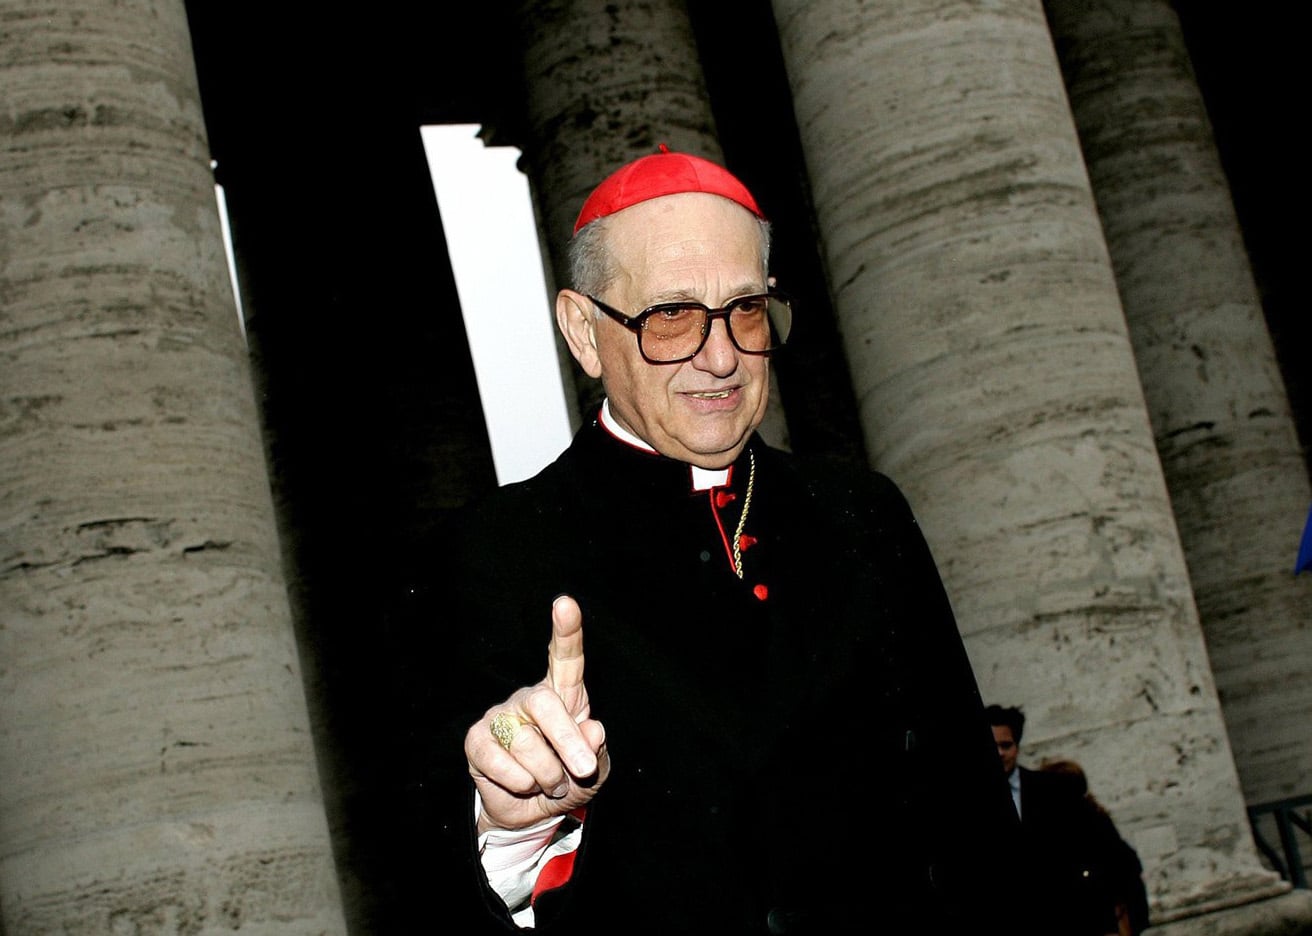 Cardinal Sergio Sebastiani